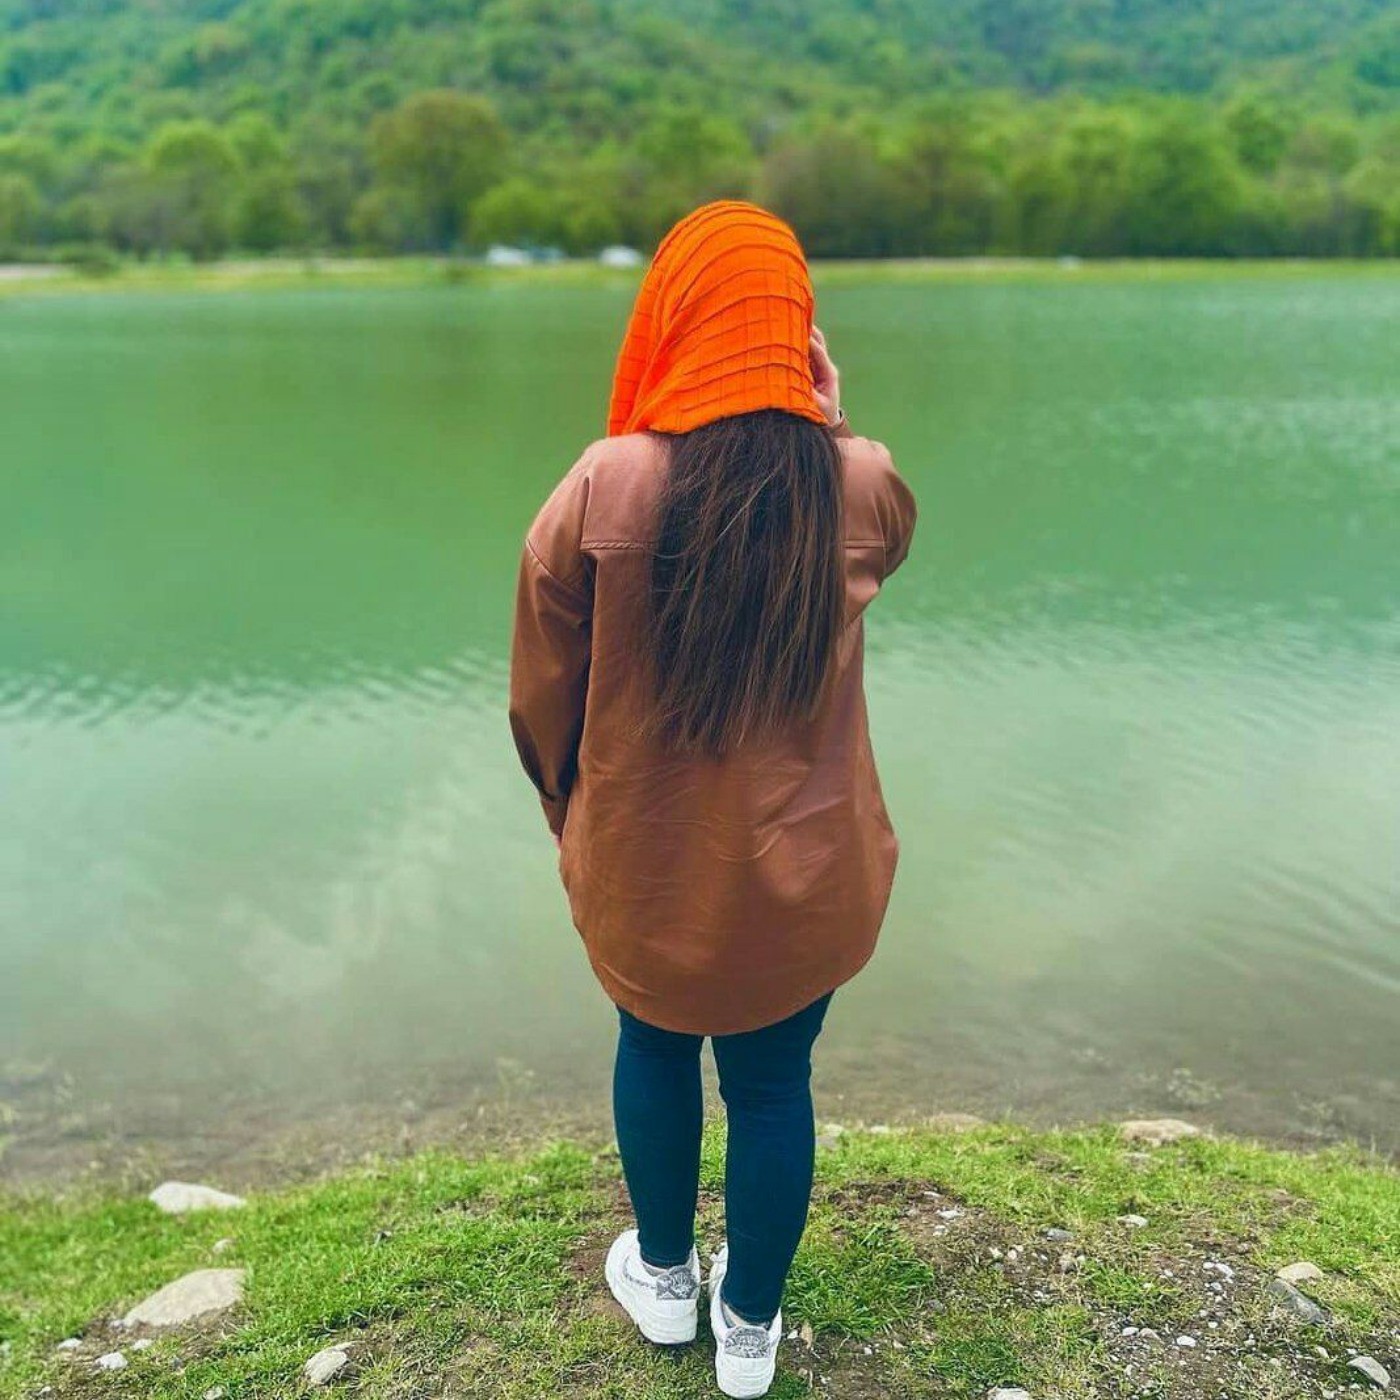 پست طبیعت دریاچه نارنجی سبز مناسب پروف